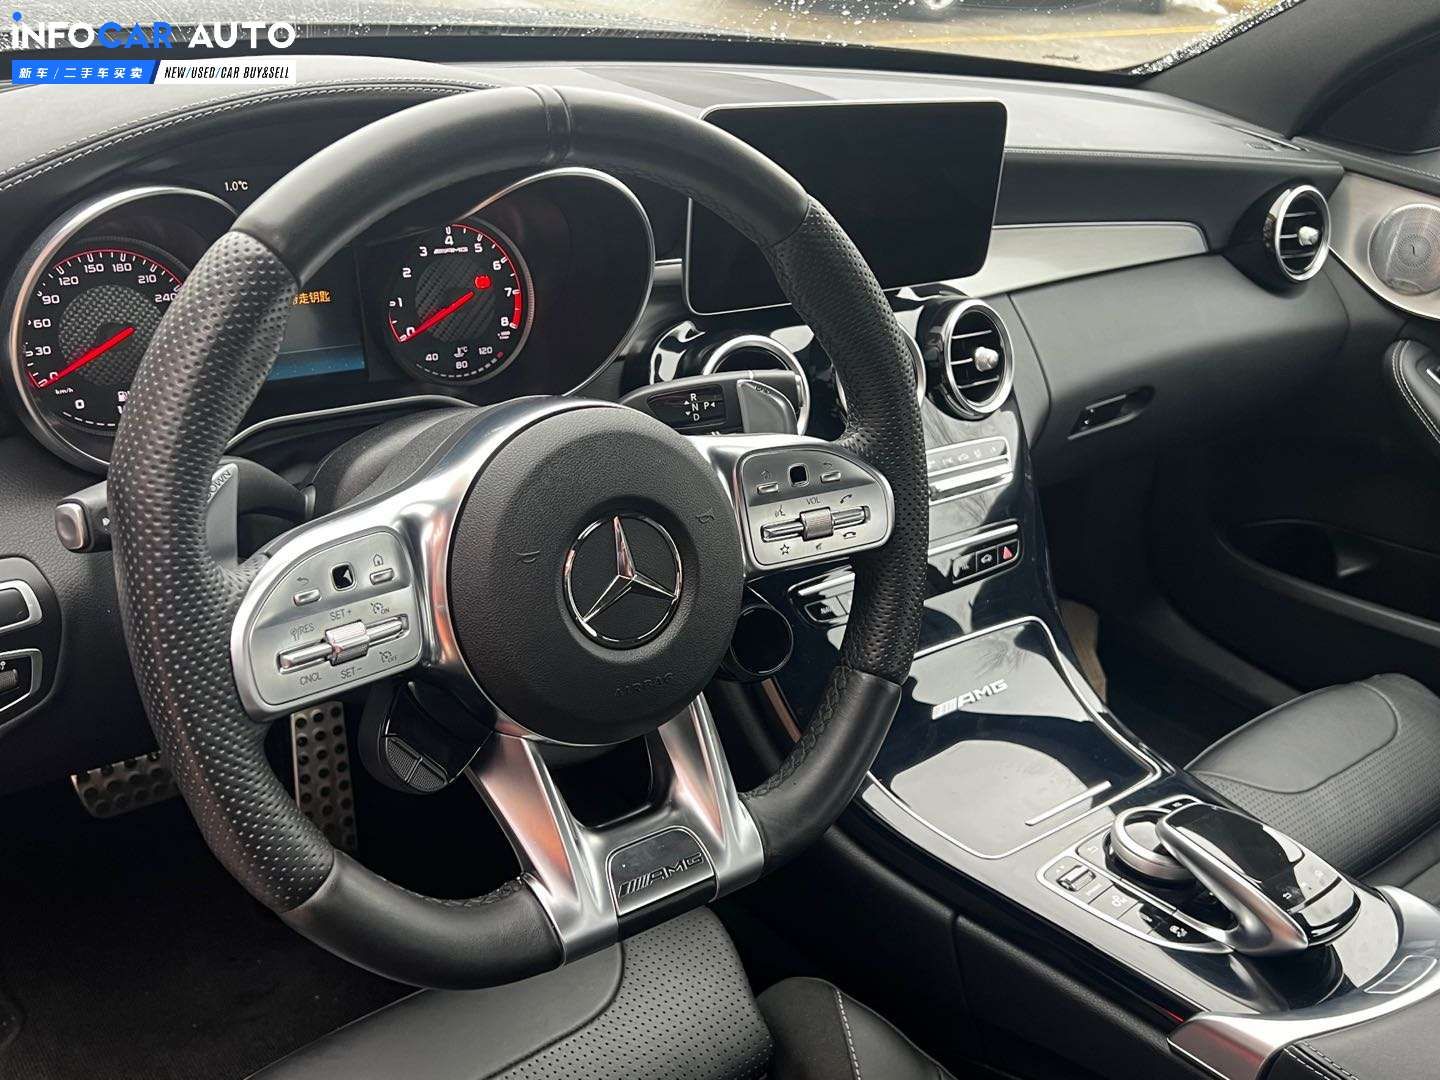 2019 Mercedes-Benz C-Class C63S - INFOCAR - Toronto Auto Trading Platform